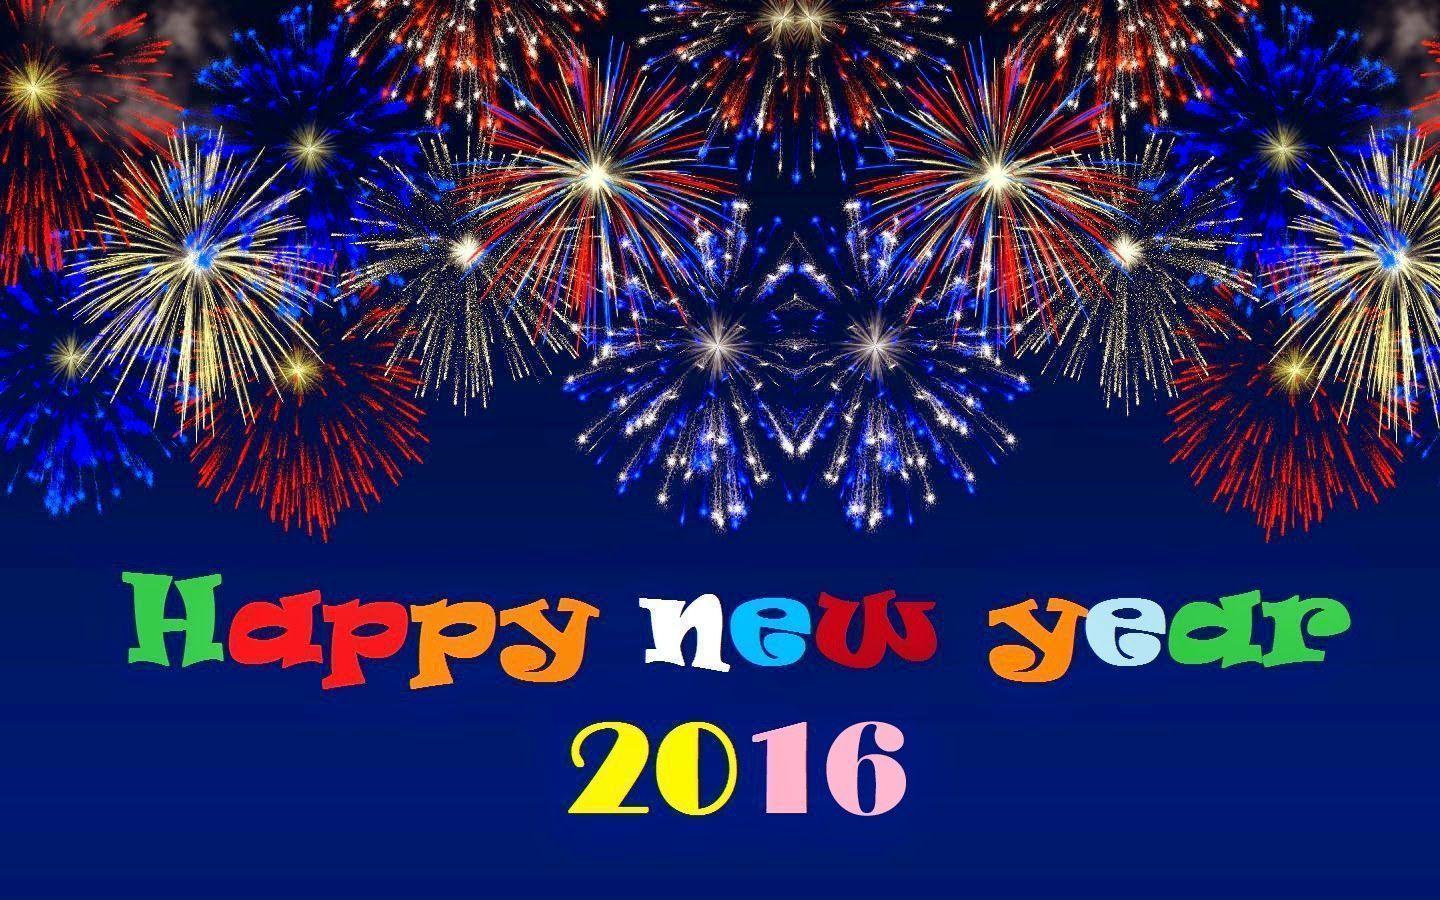 Happy New Year 2016 Wallpaper HD Image